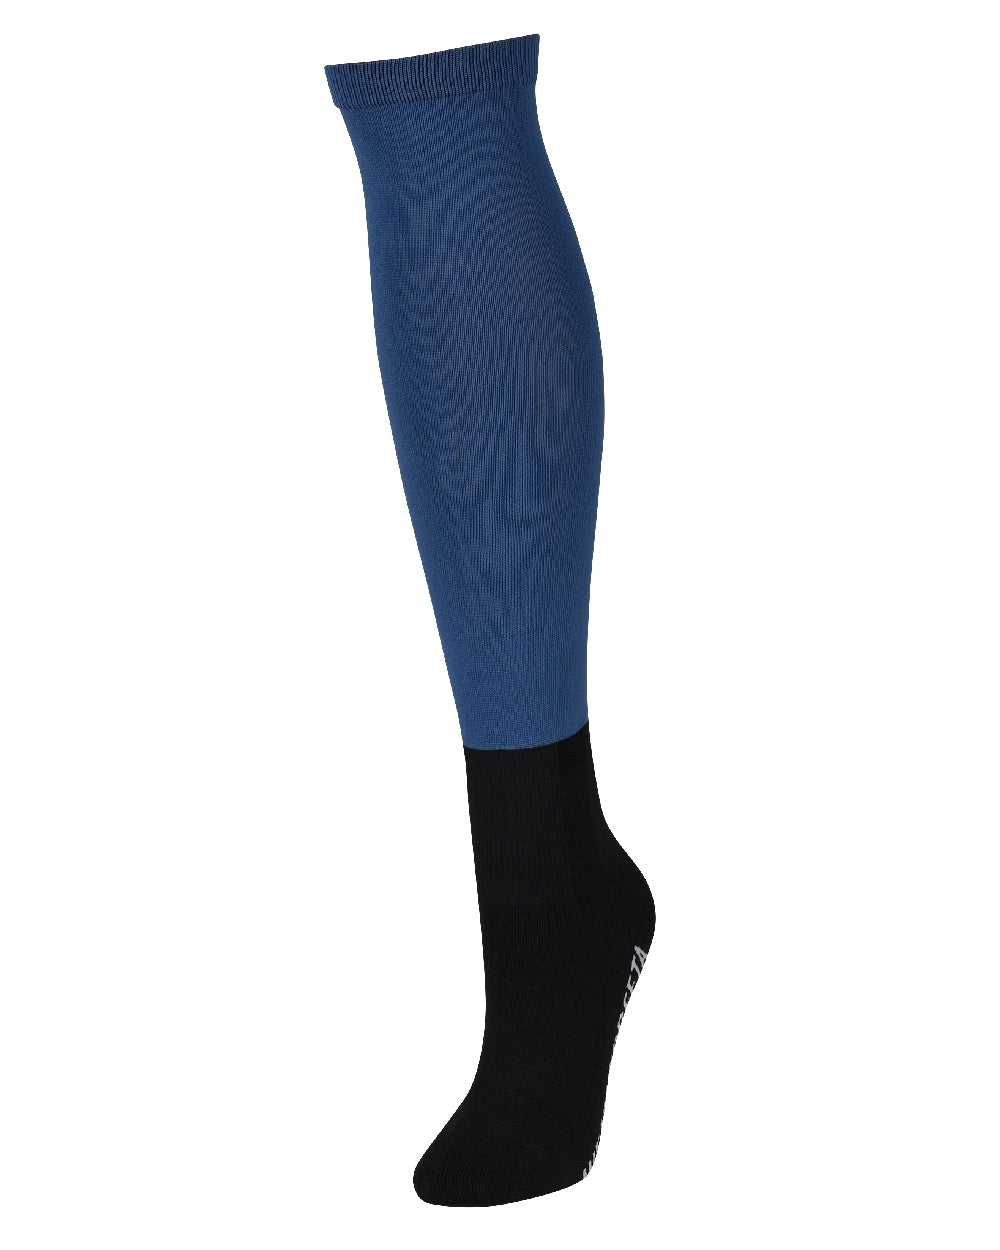 WeatherBeeta Prime Stocking Socks in Slate Blue 